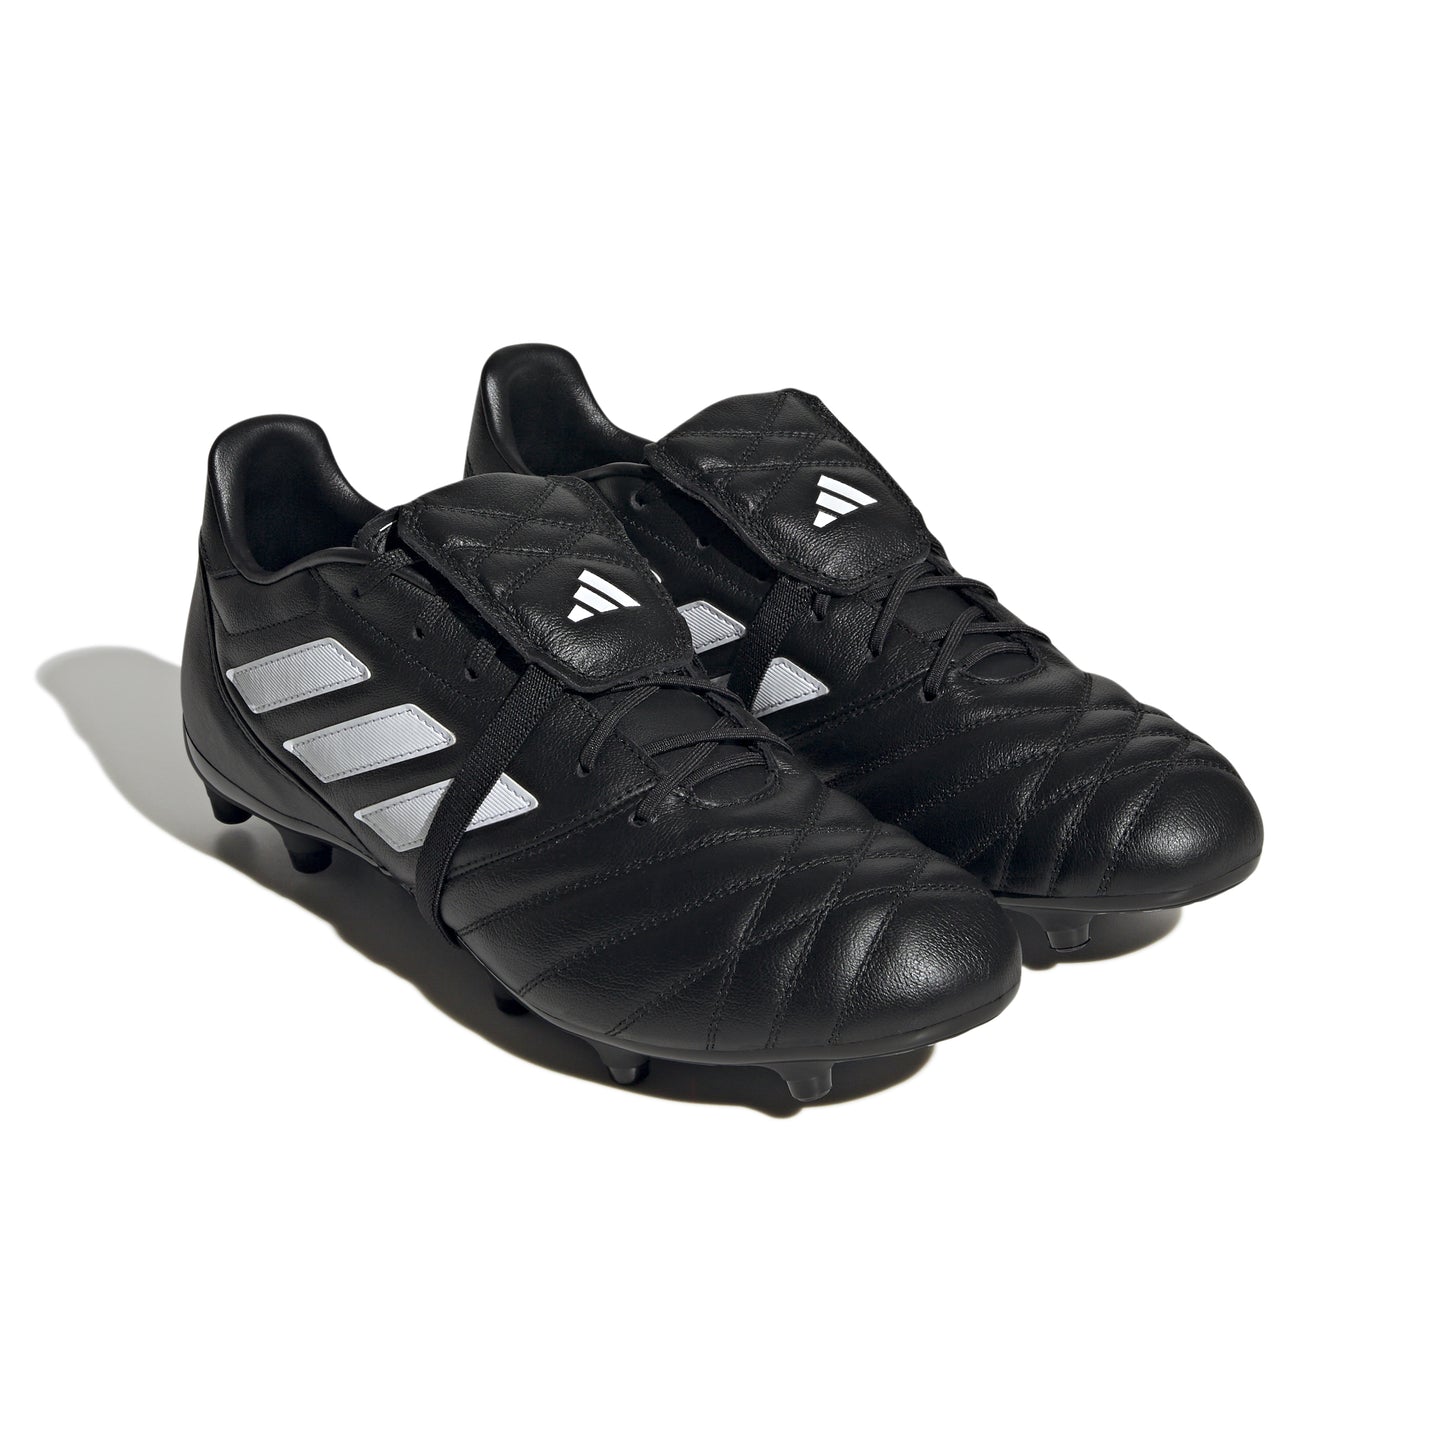 adidas Copa Gloro FG Soccer Cleats Black Leather